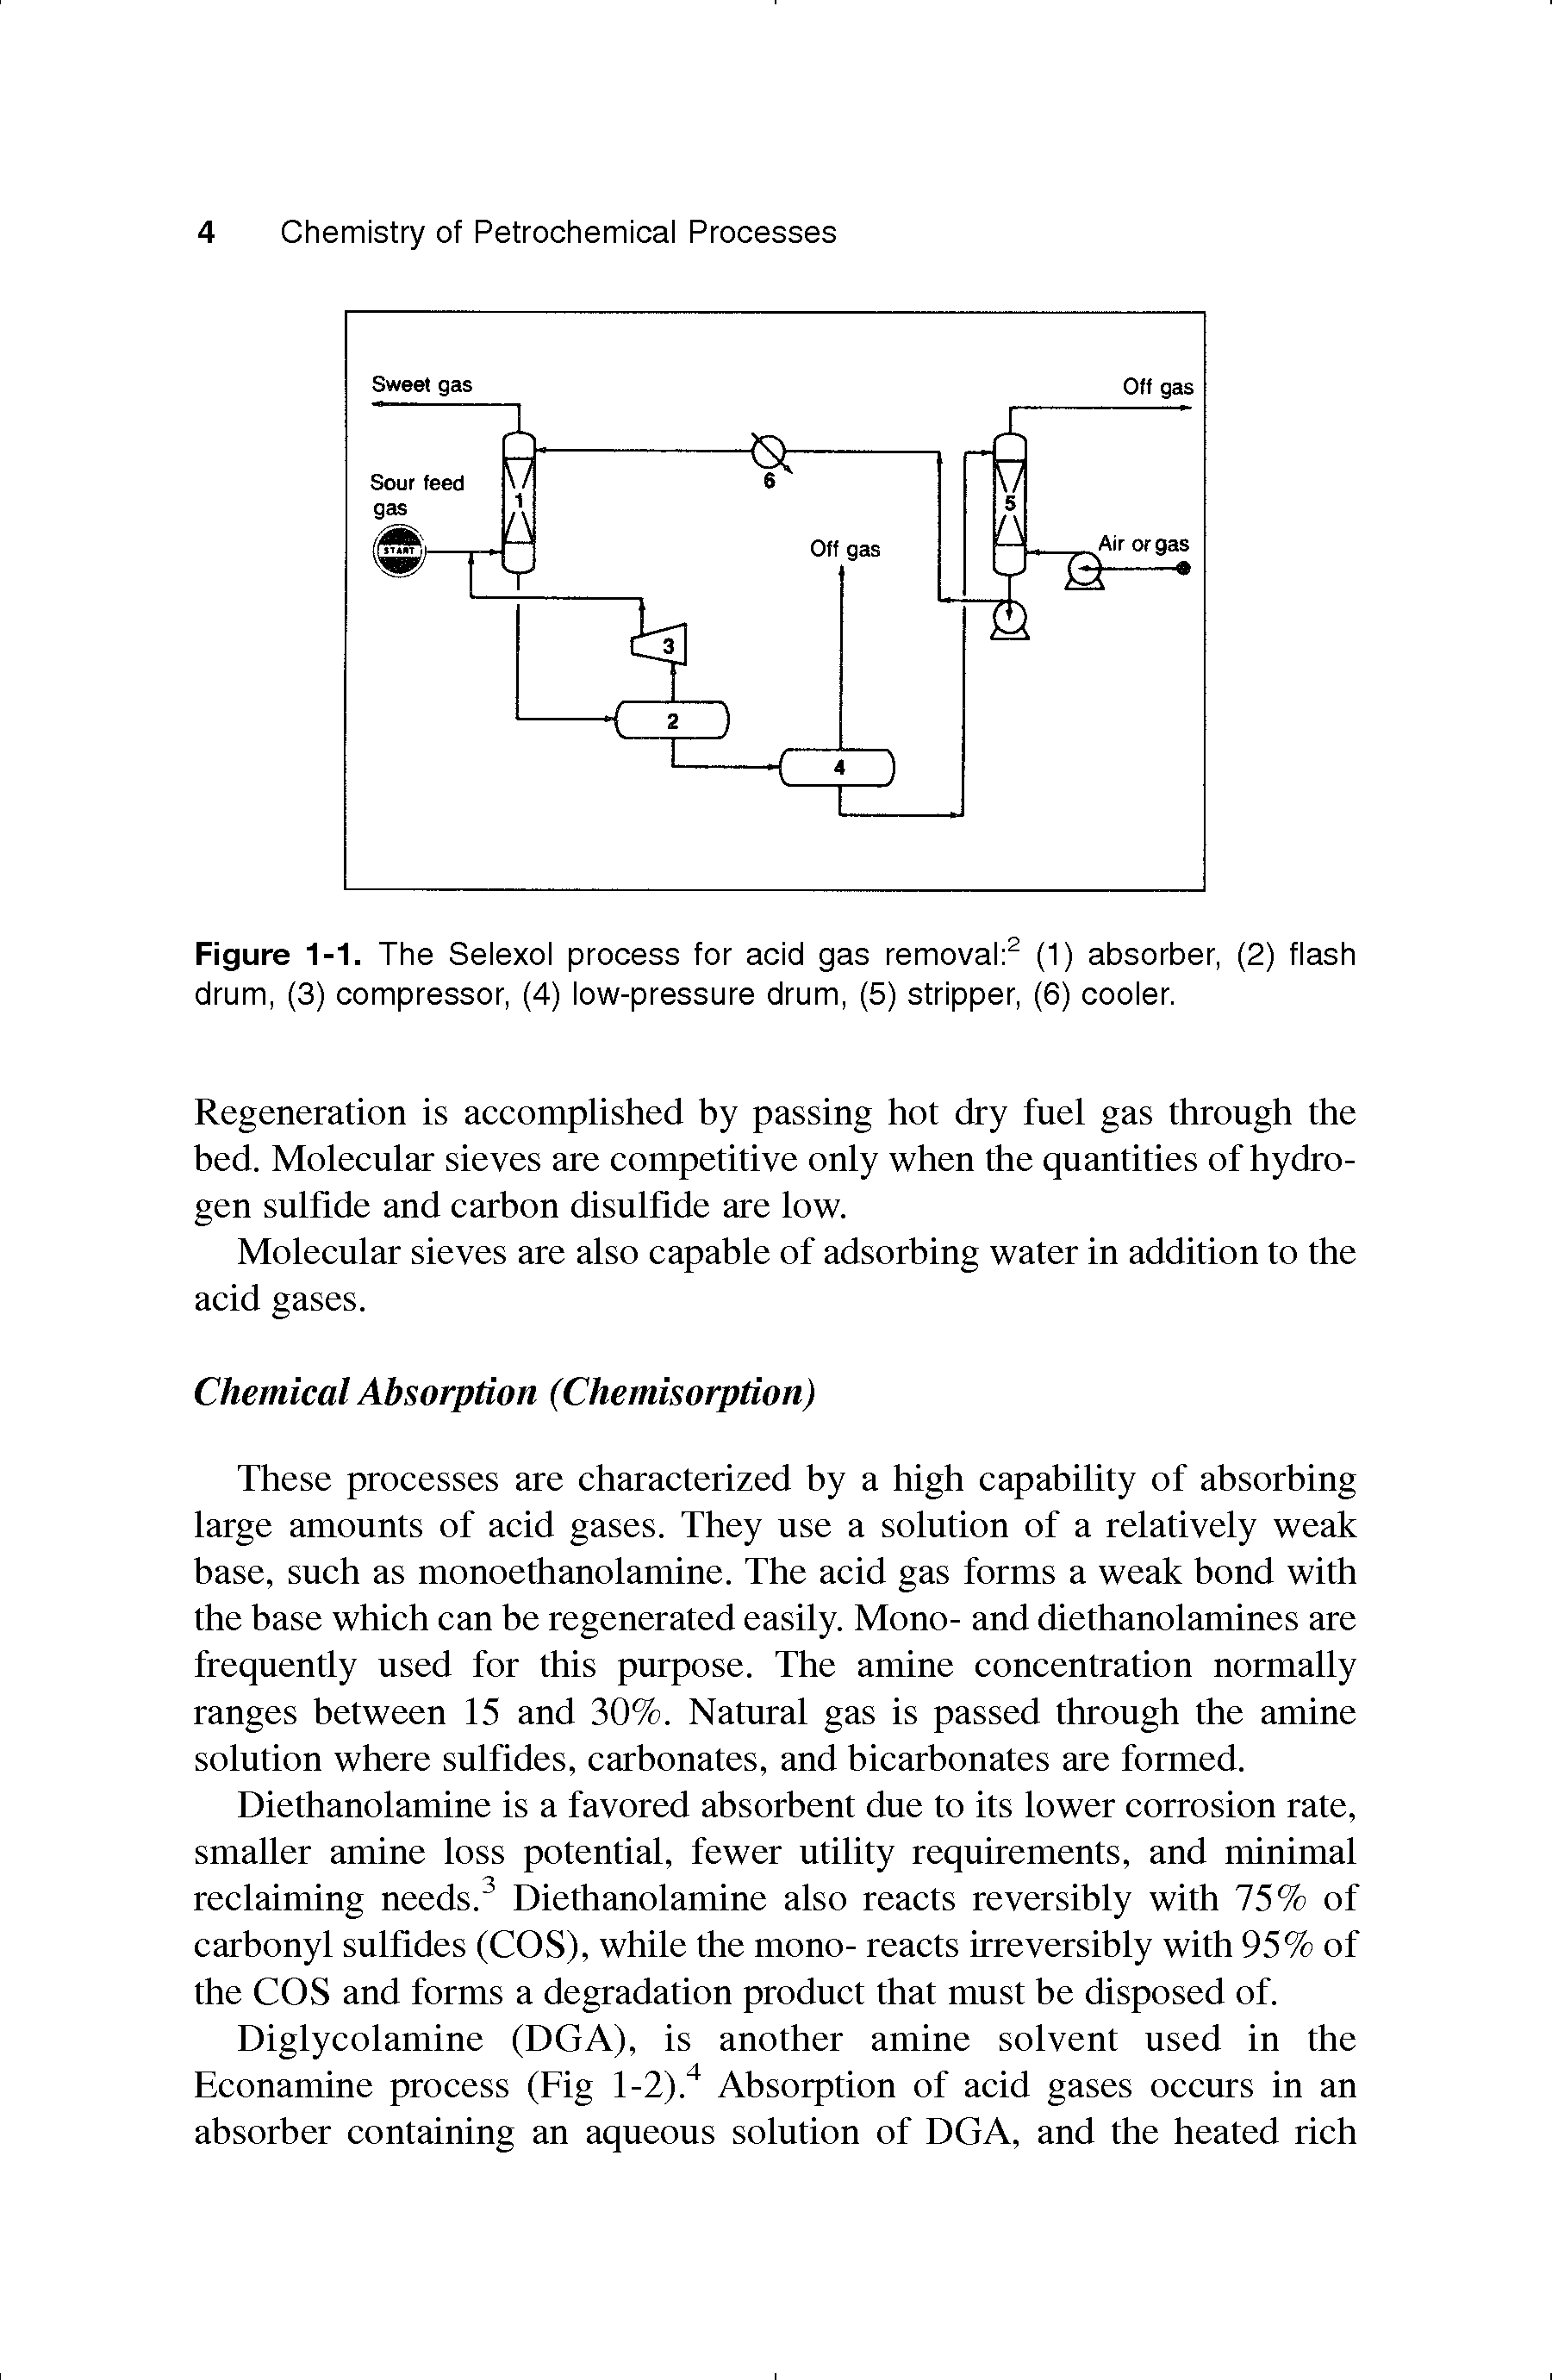 Figure 1-1. The Selexol process for acid gas removal (1) absorber, (2) flash drum, (3) compressor, (4) low-pressure drum, (5) stripper, (6) cooler.